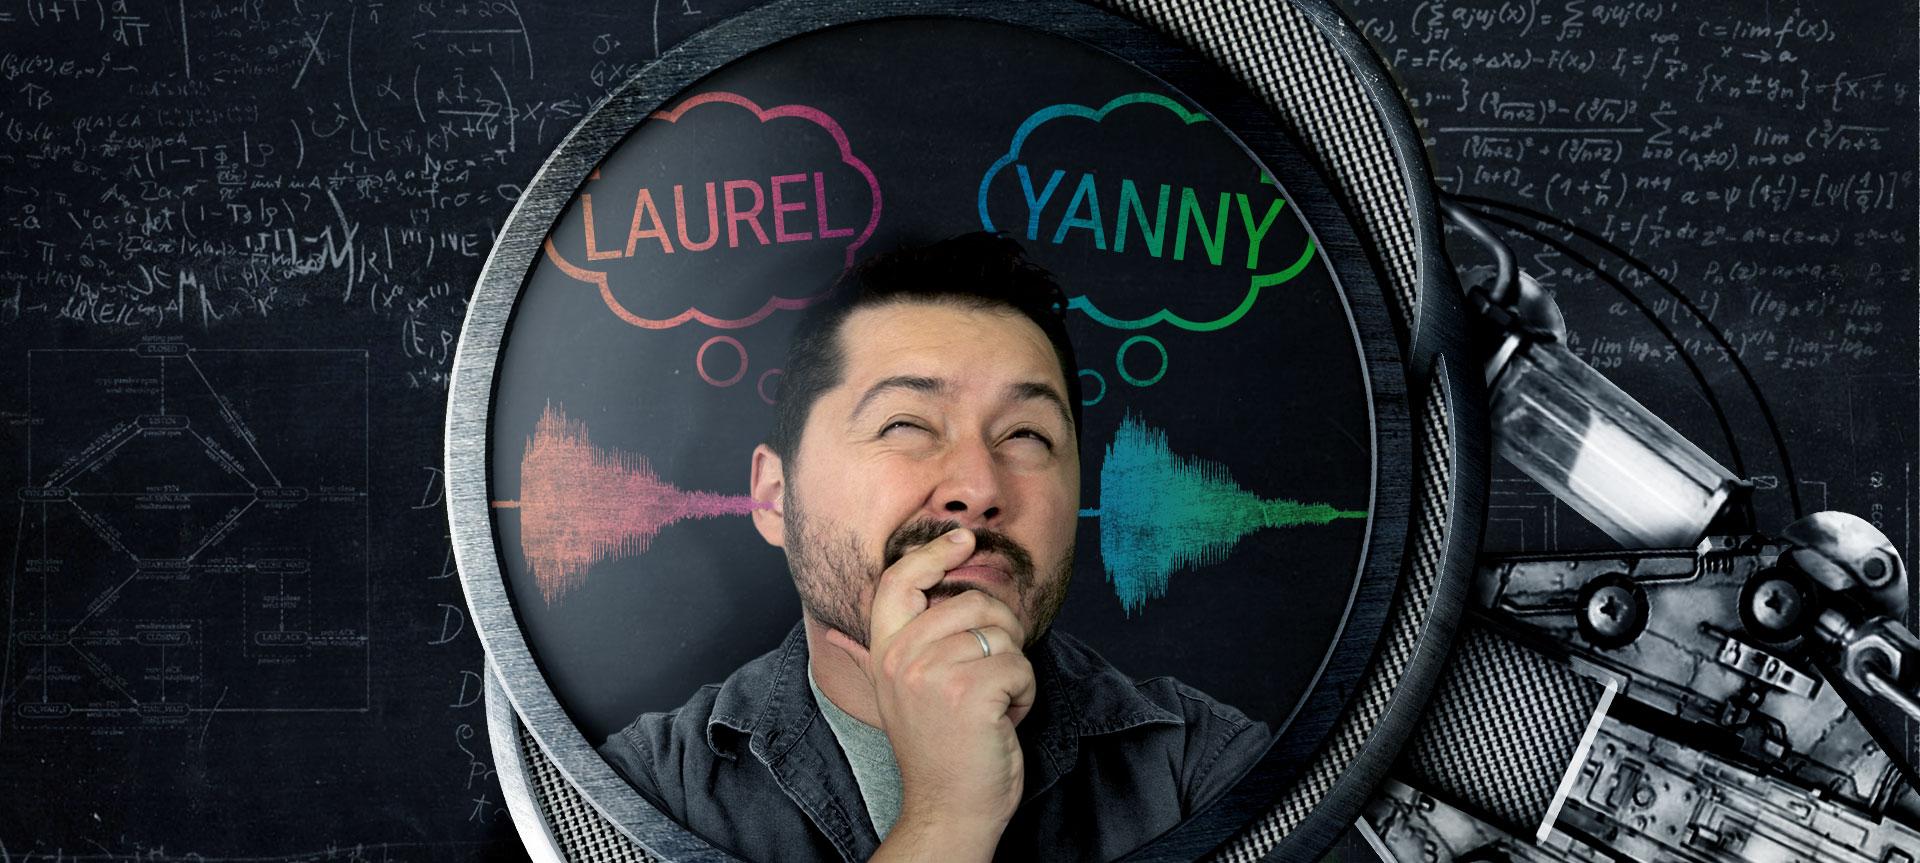 Som: Yanny ou Laurel?